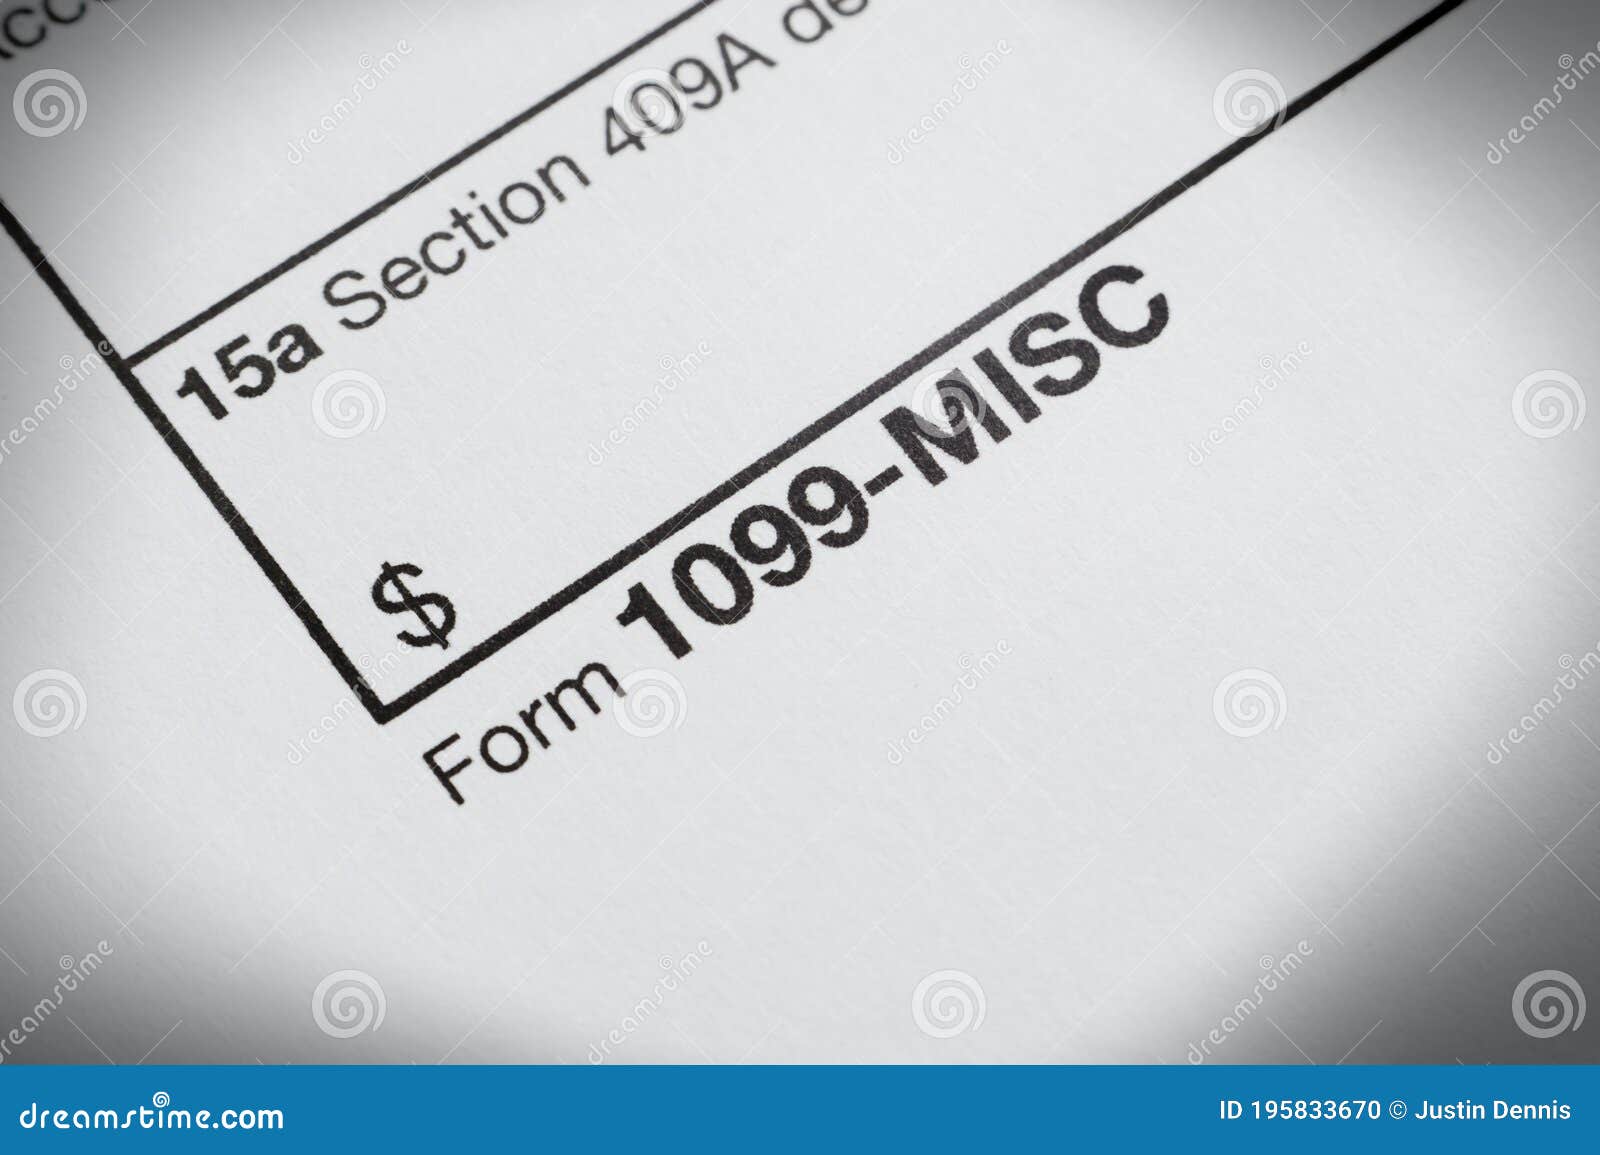 tax 1099 misc form